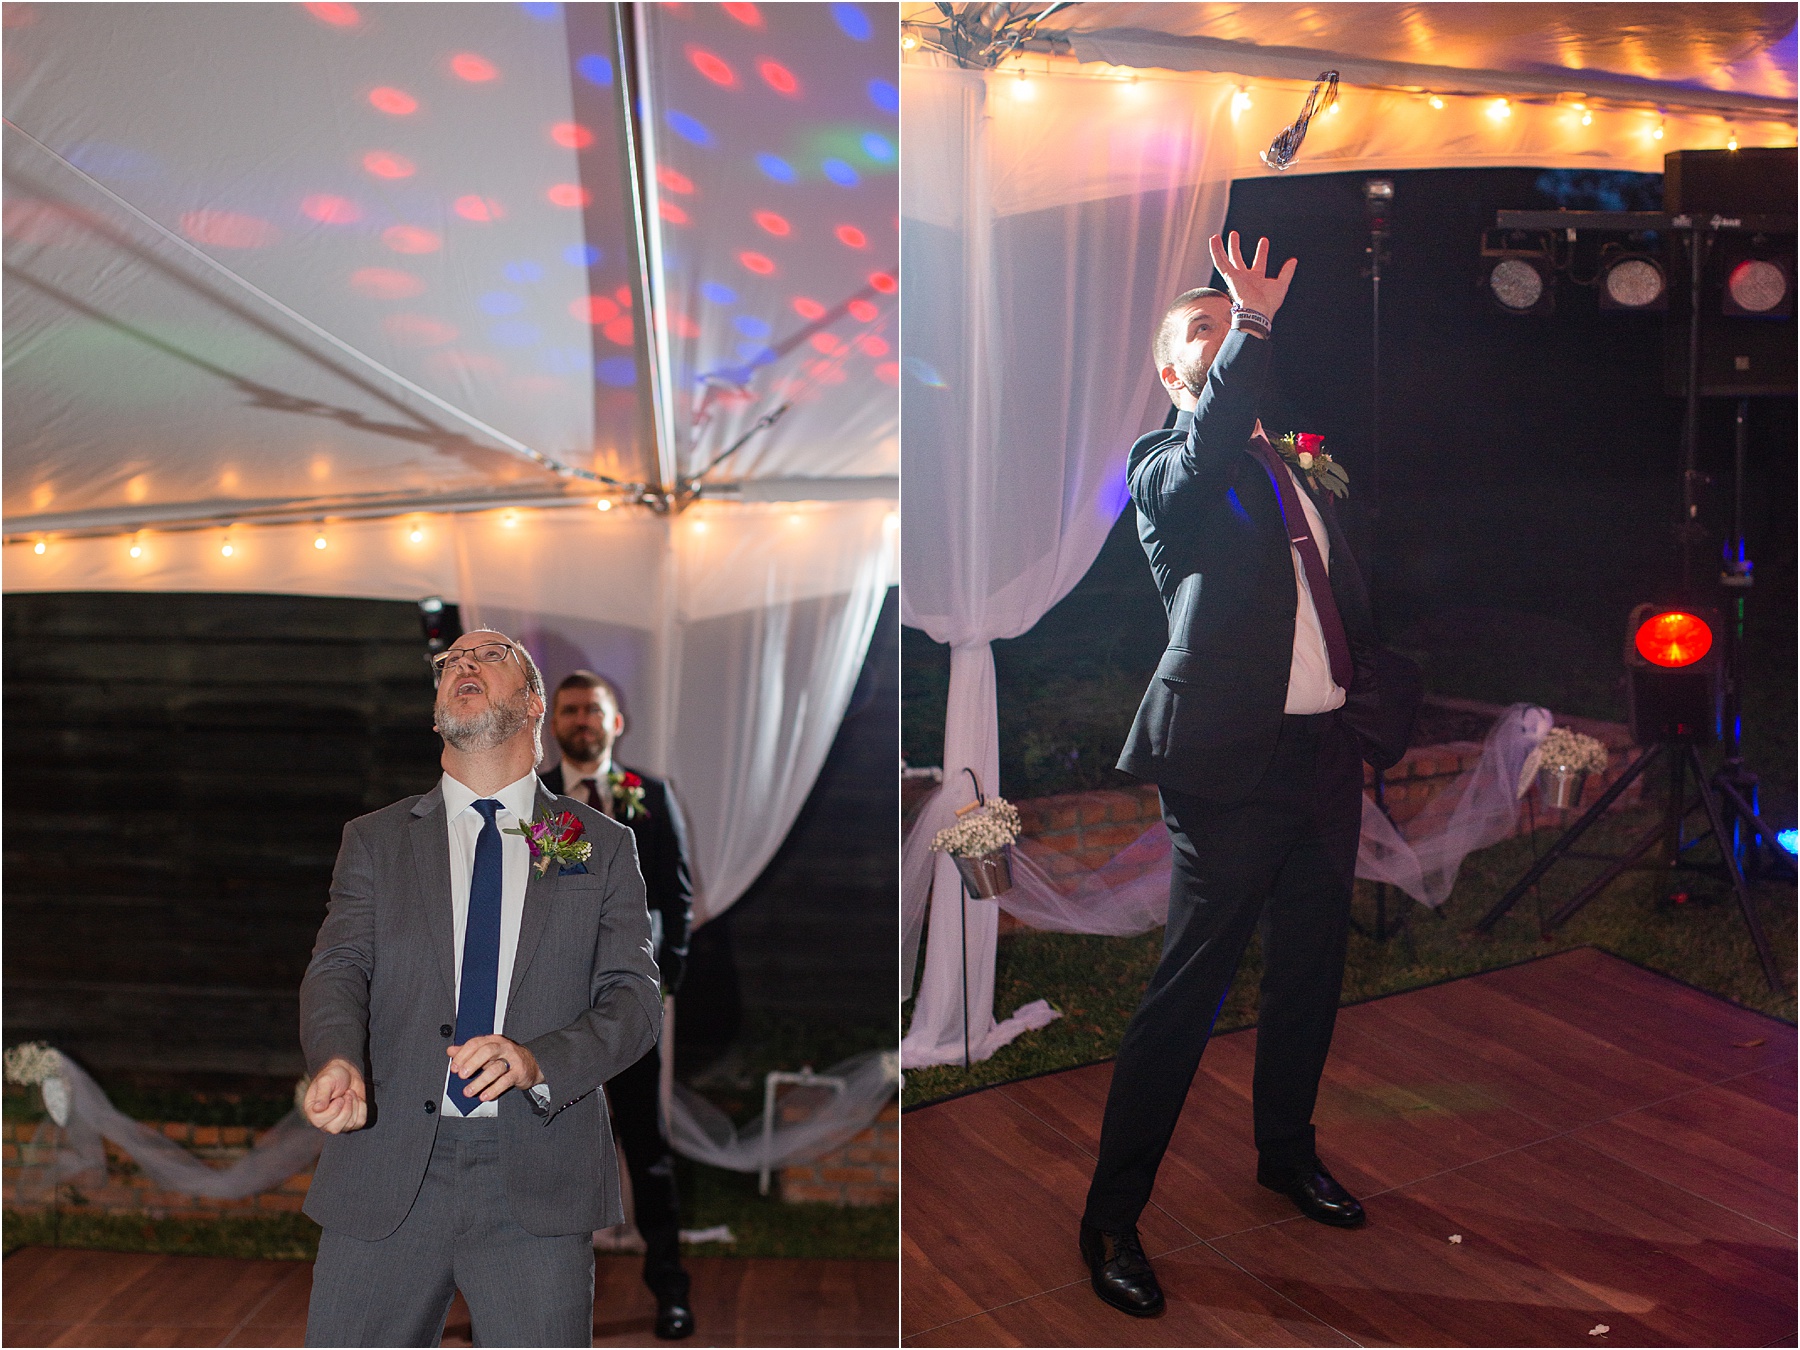 groomsman catches garter at wedding reception